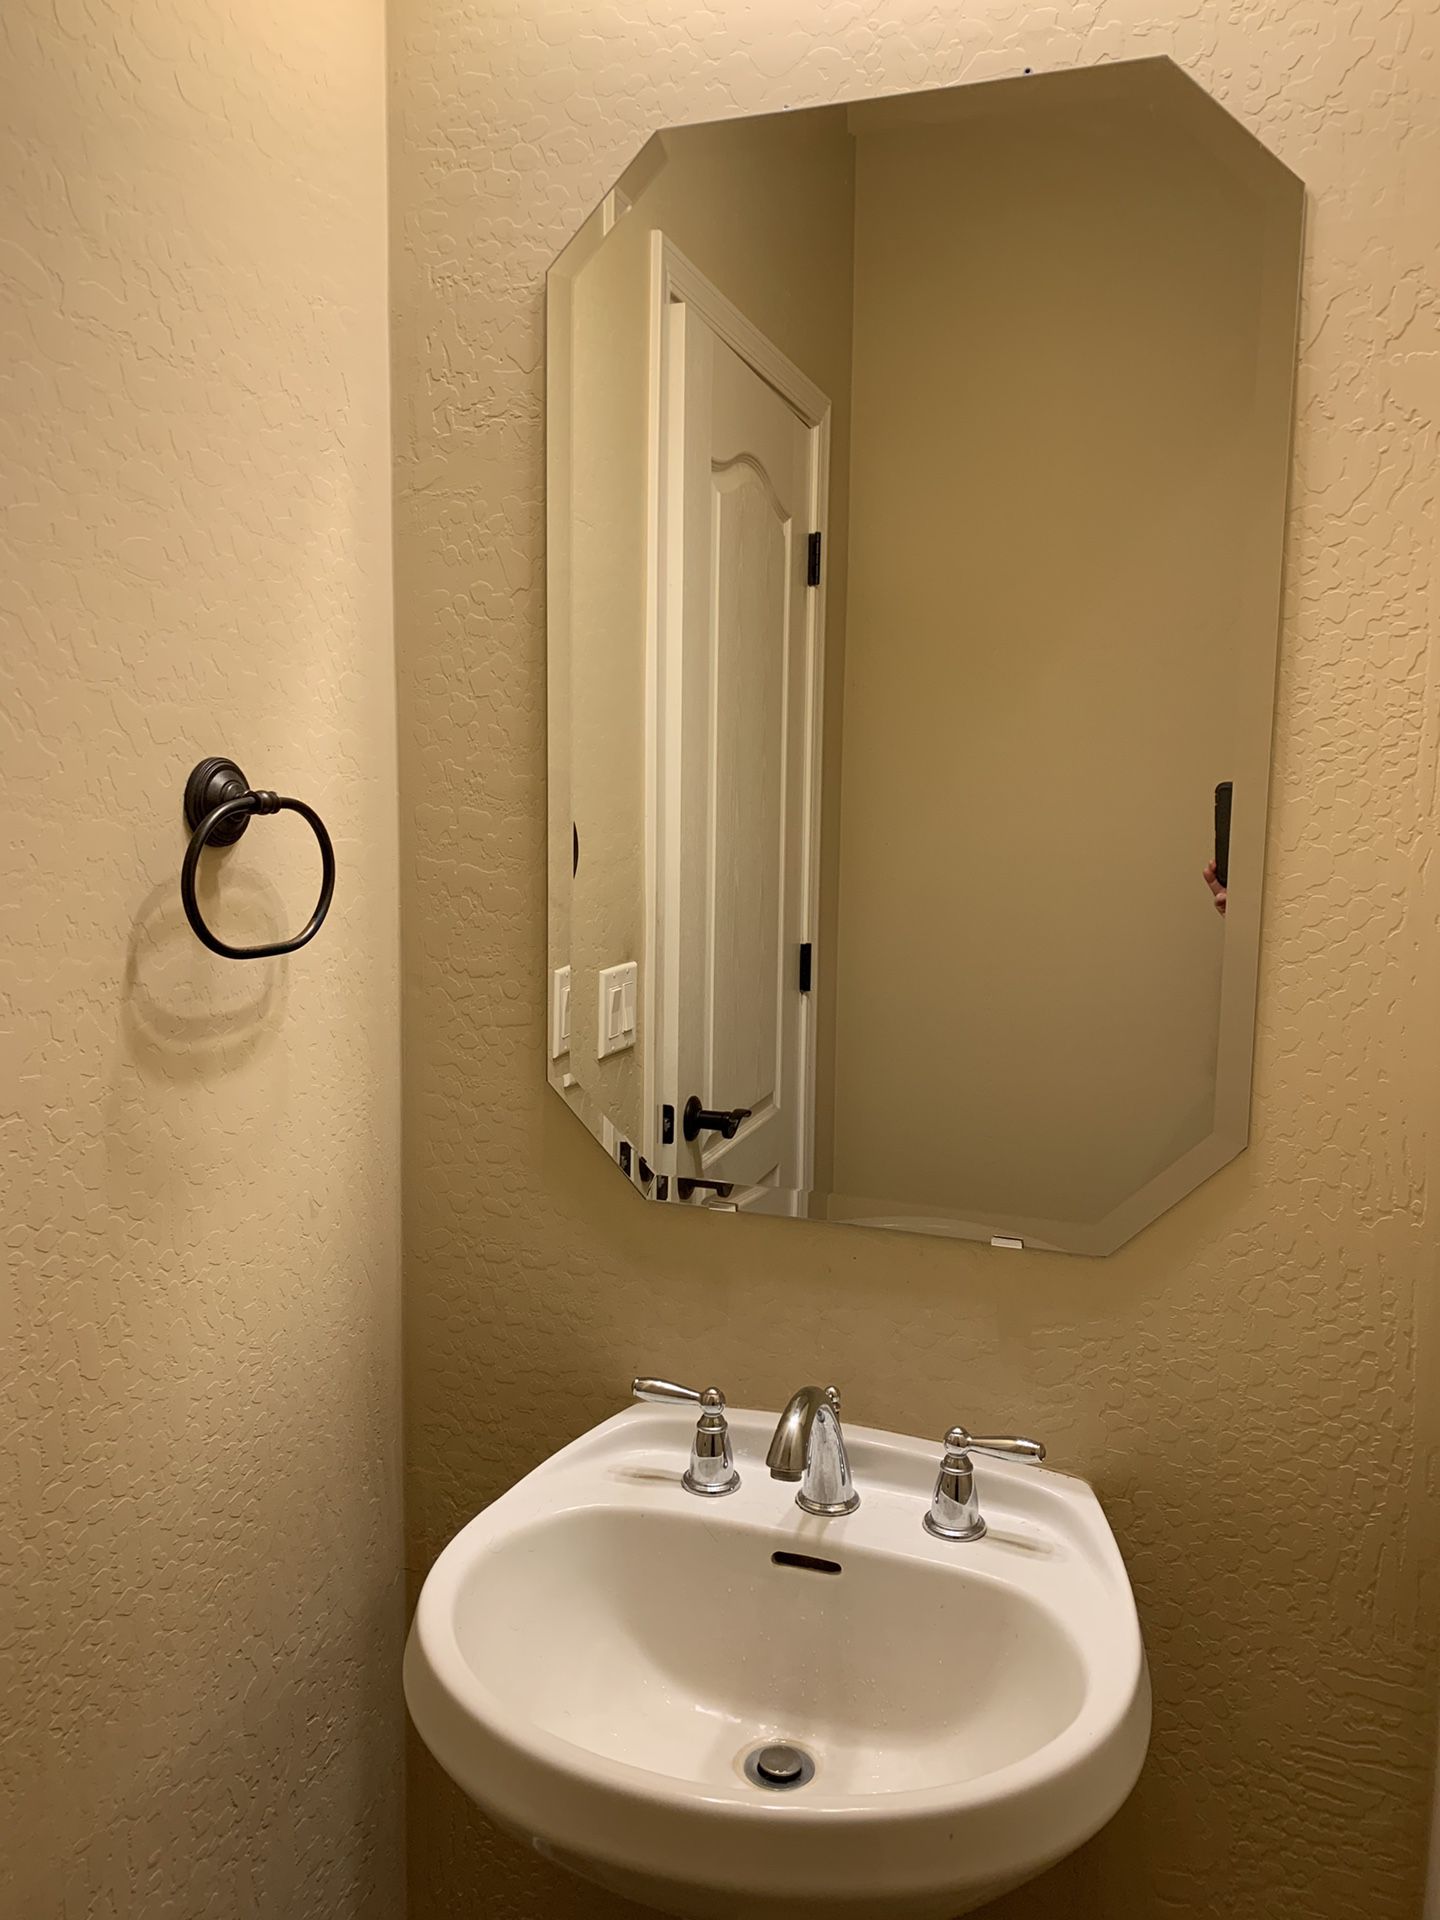 Bathroom mirror and pedestal